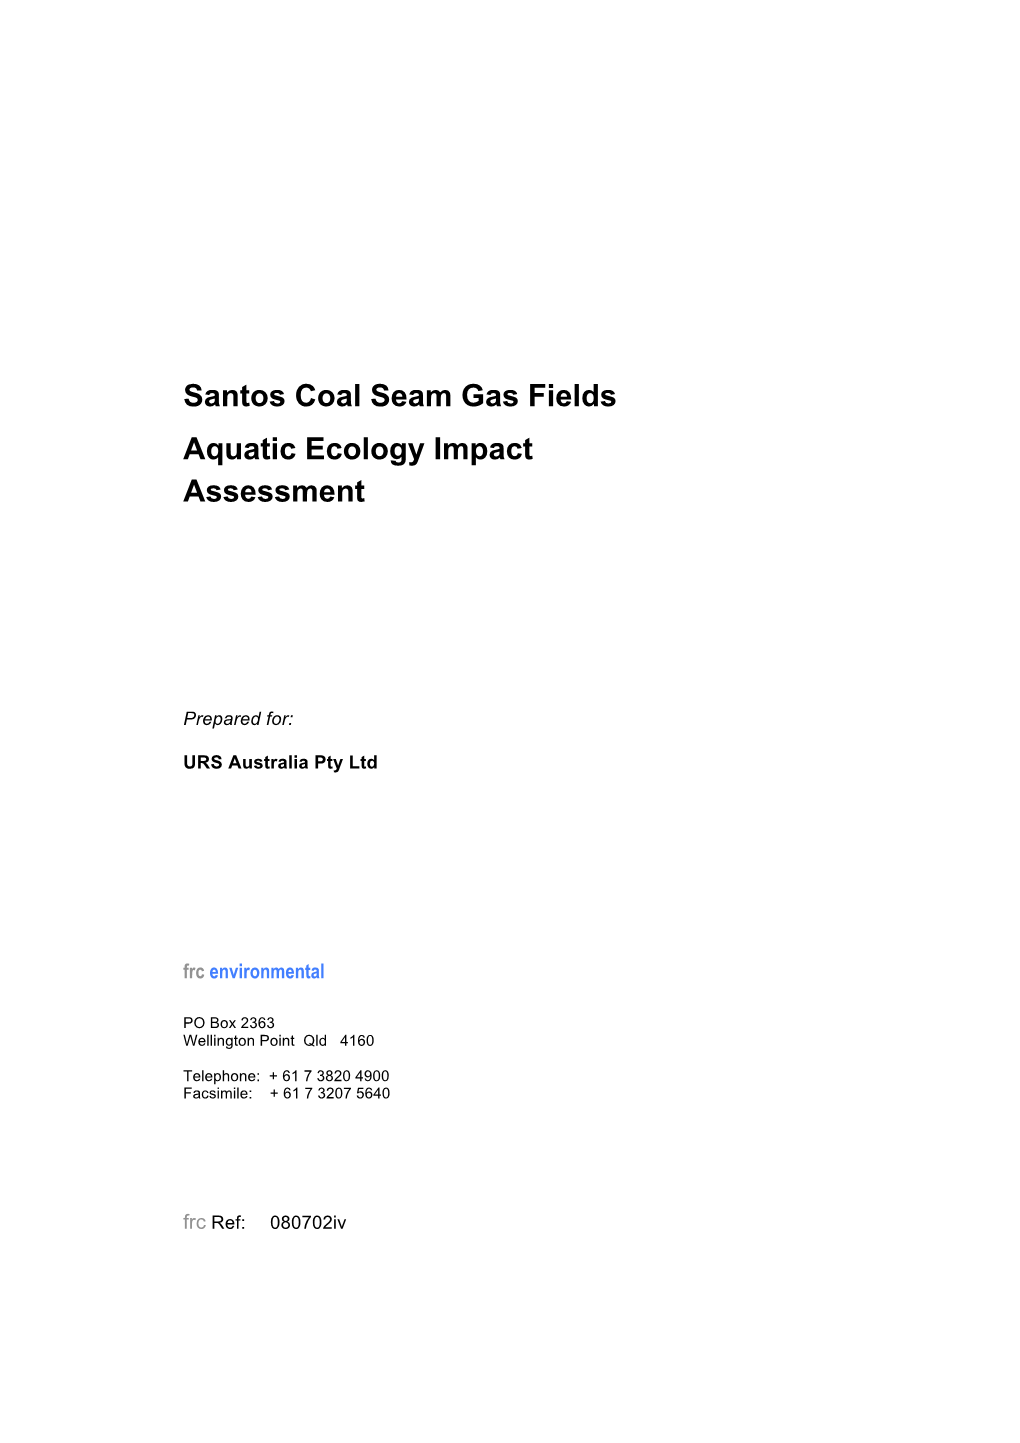 Santos Coal Seam Gas Fields Aquatic Ecology Impact Assessment